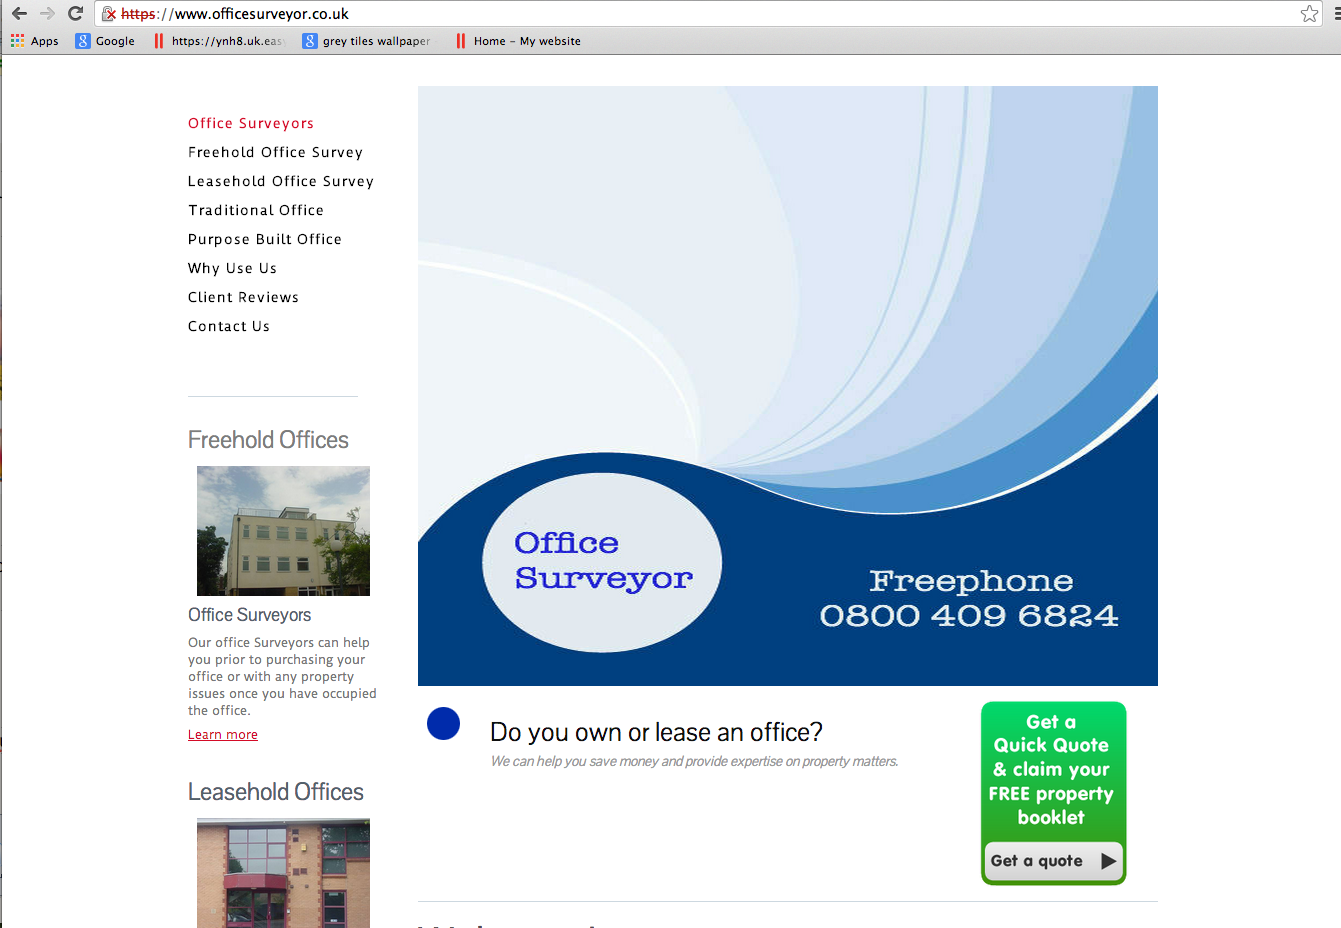  Take a Look At OfficeSurveyor.co.uk